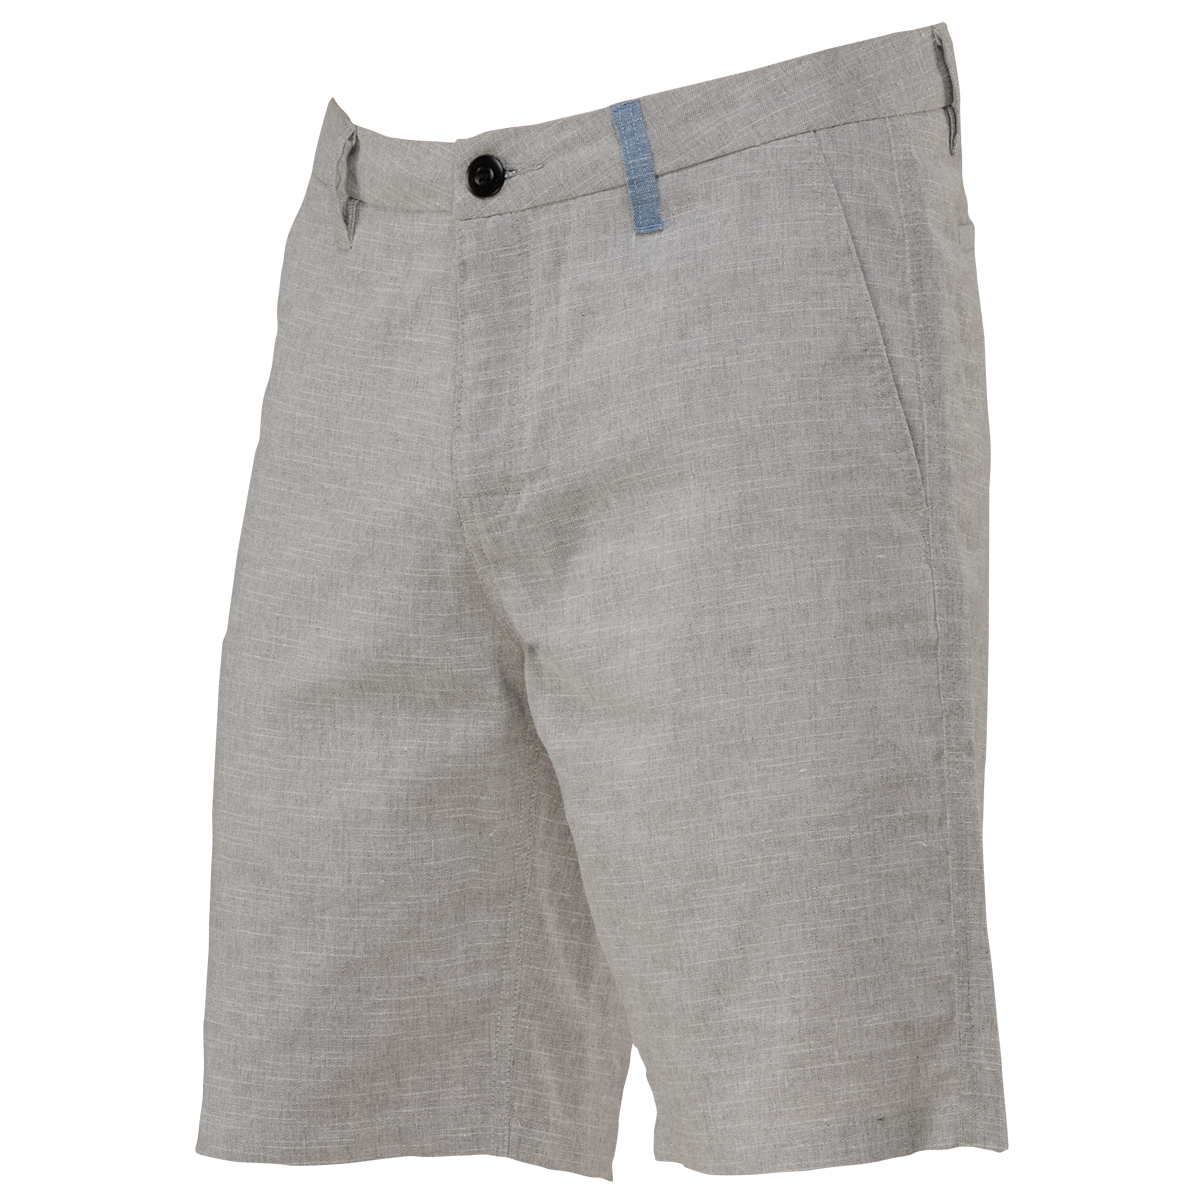 Dye Trader Shorts   Light Gray   Blue